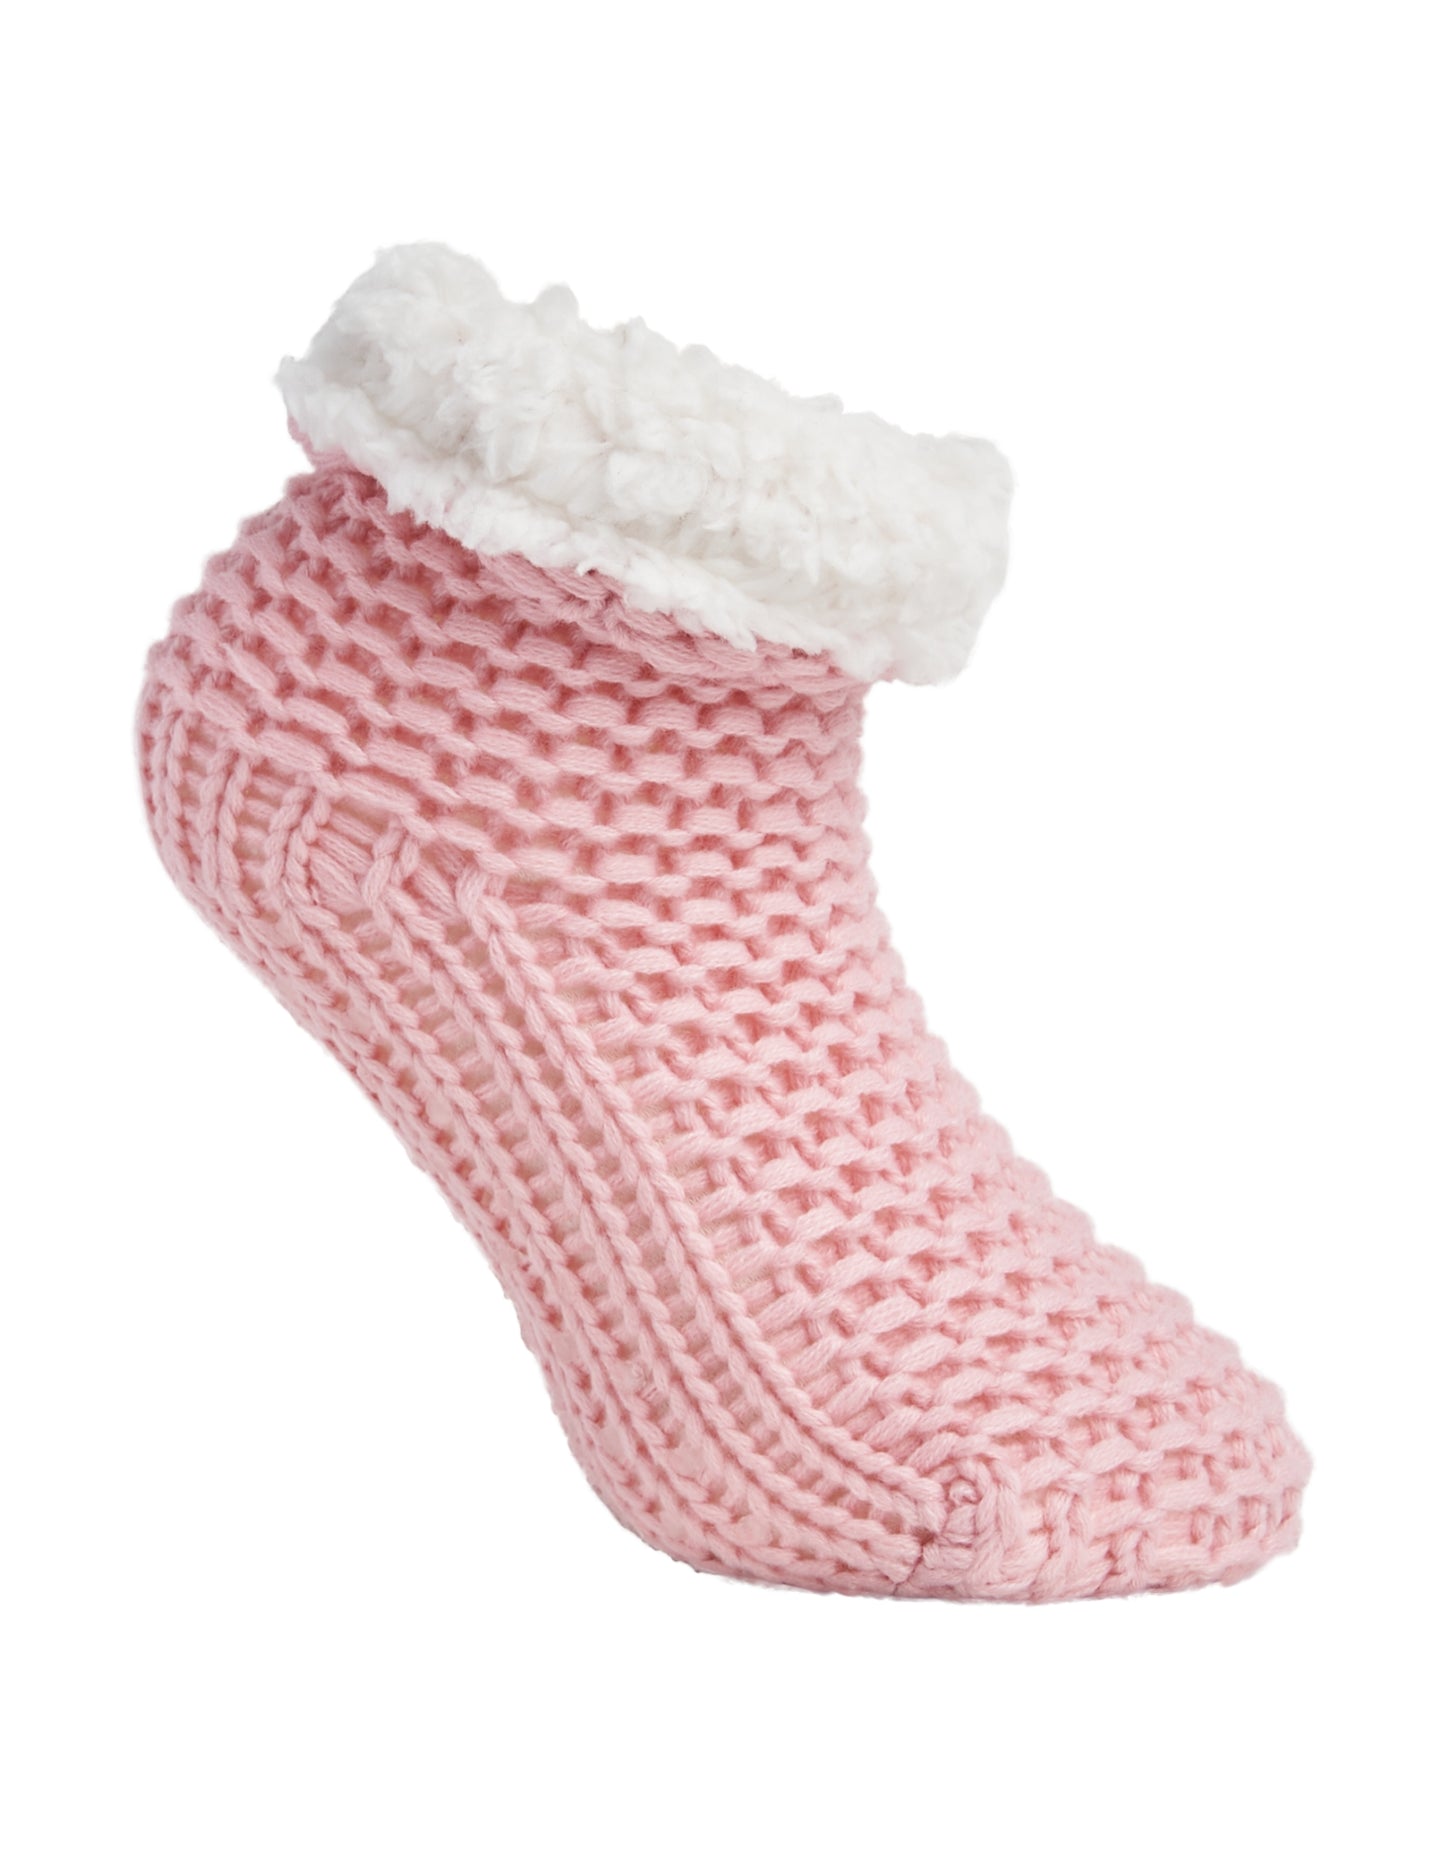 Side of Simon de Winter Women's Chunky Knit Home Socks in Smokey Rose